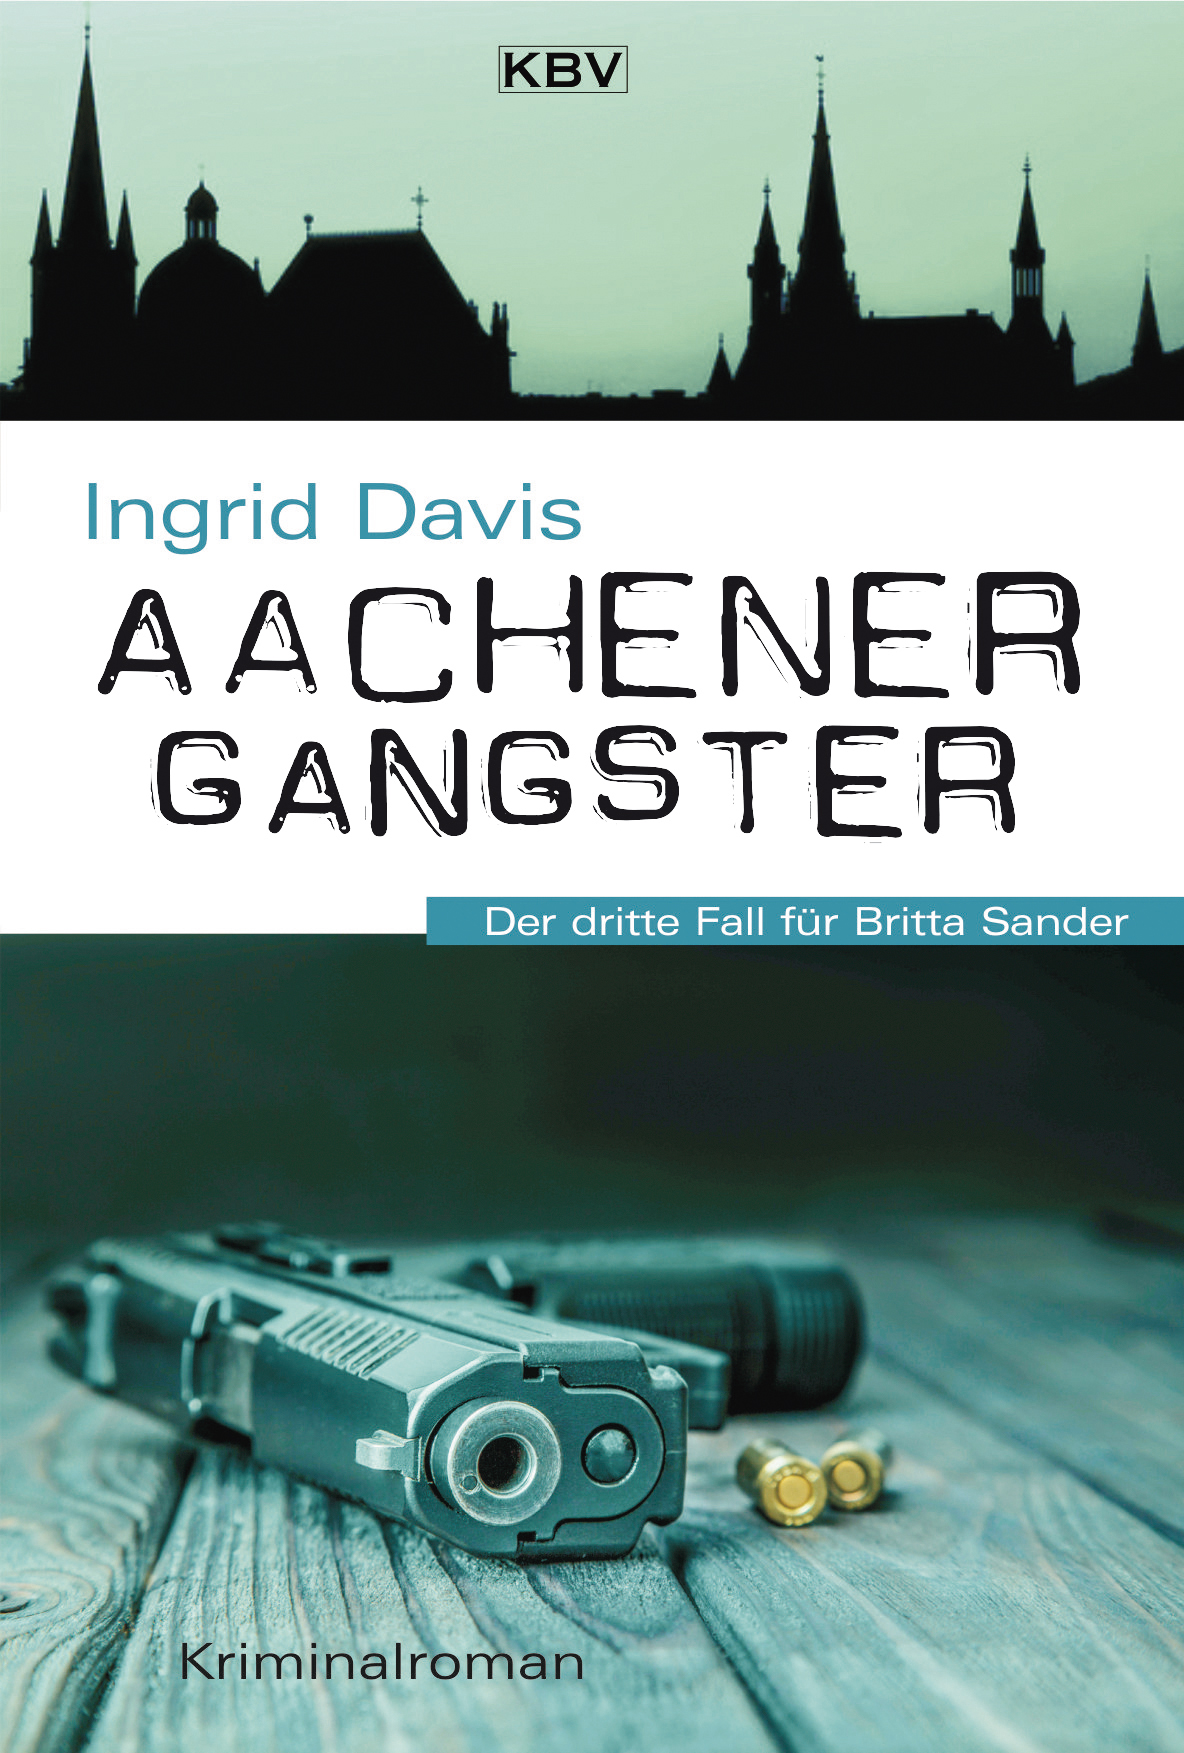 Onlinelesung Aachener Gangster auf YouTube